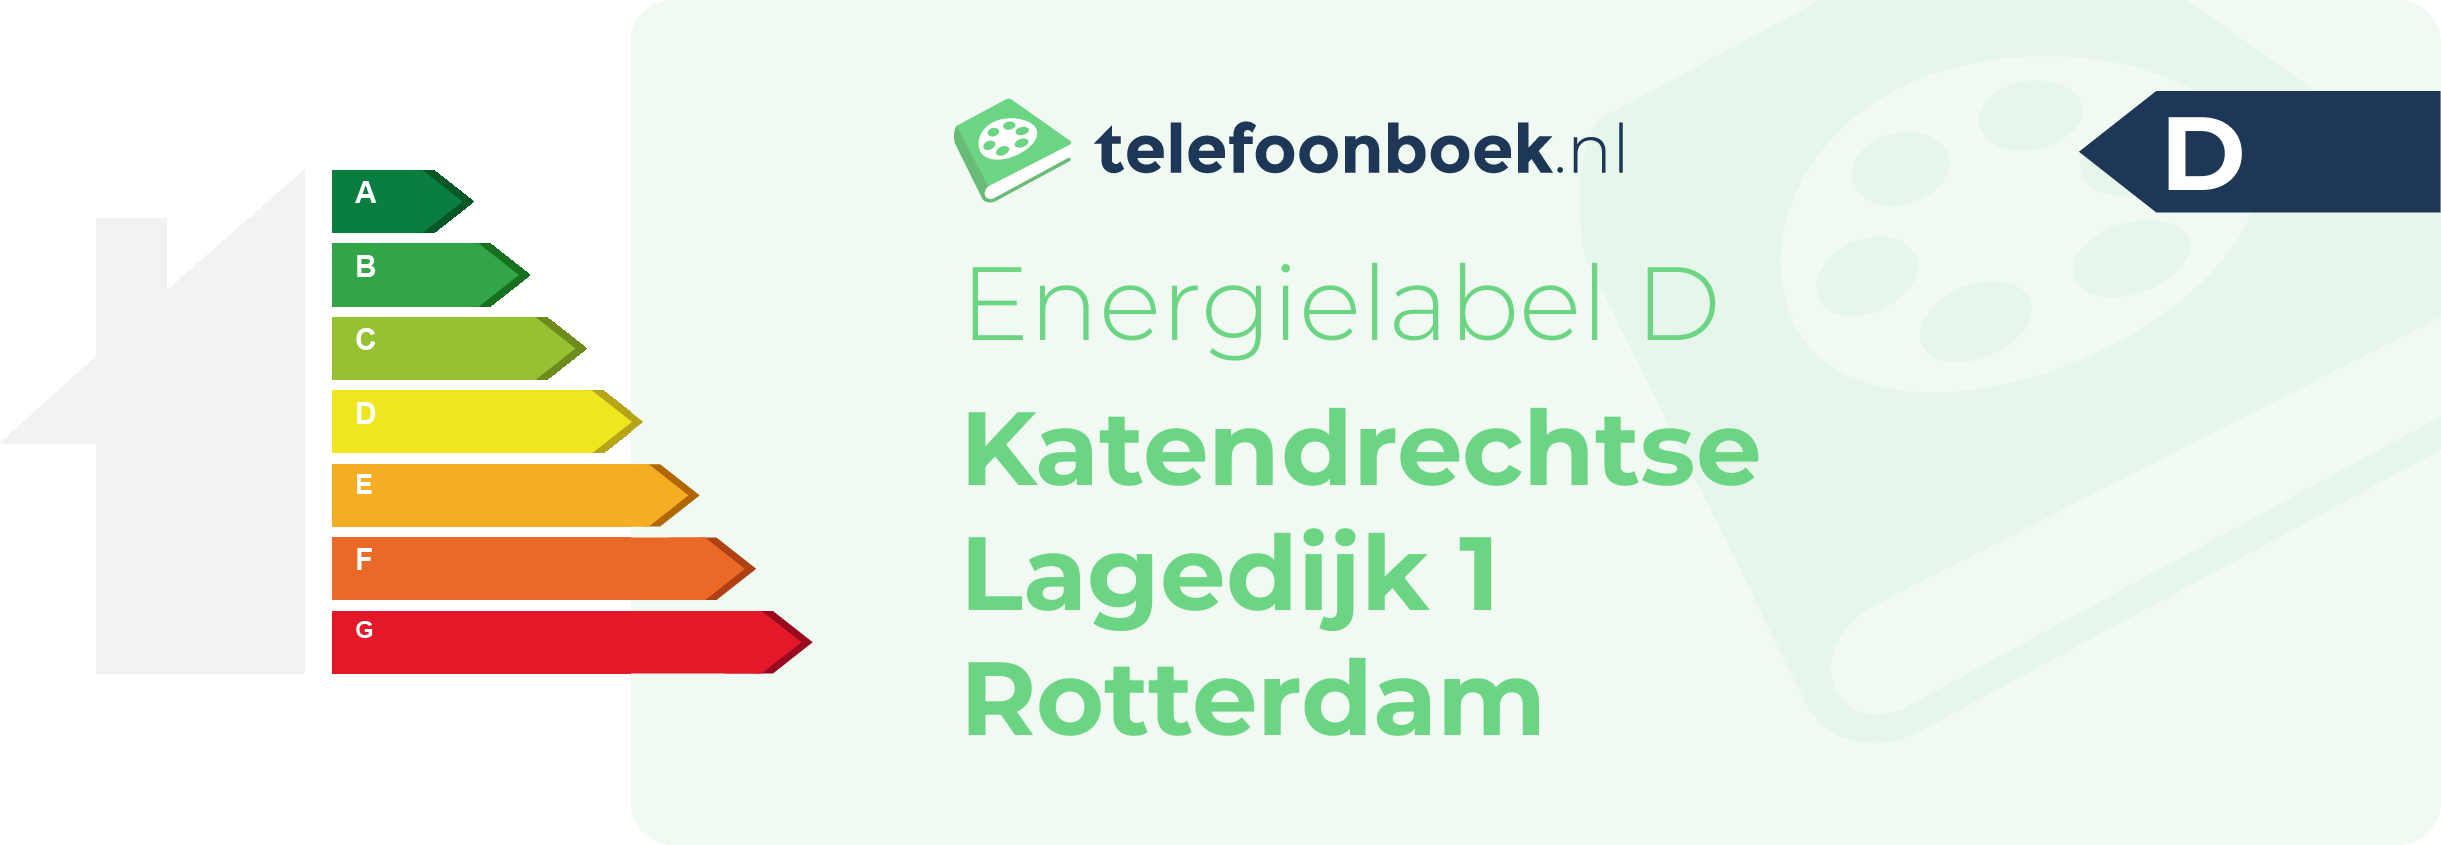 Energielabel Katendrechtse Lagedijk 1 Rotterdam